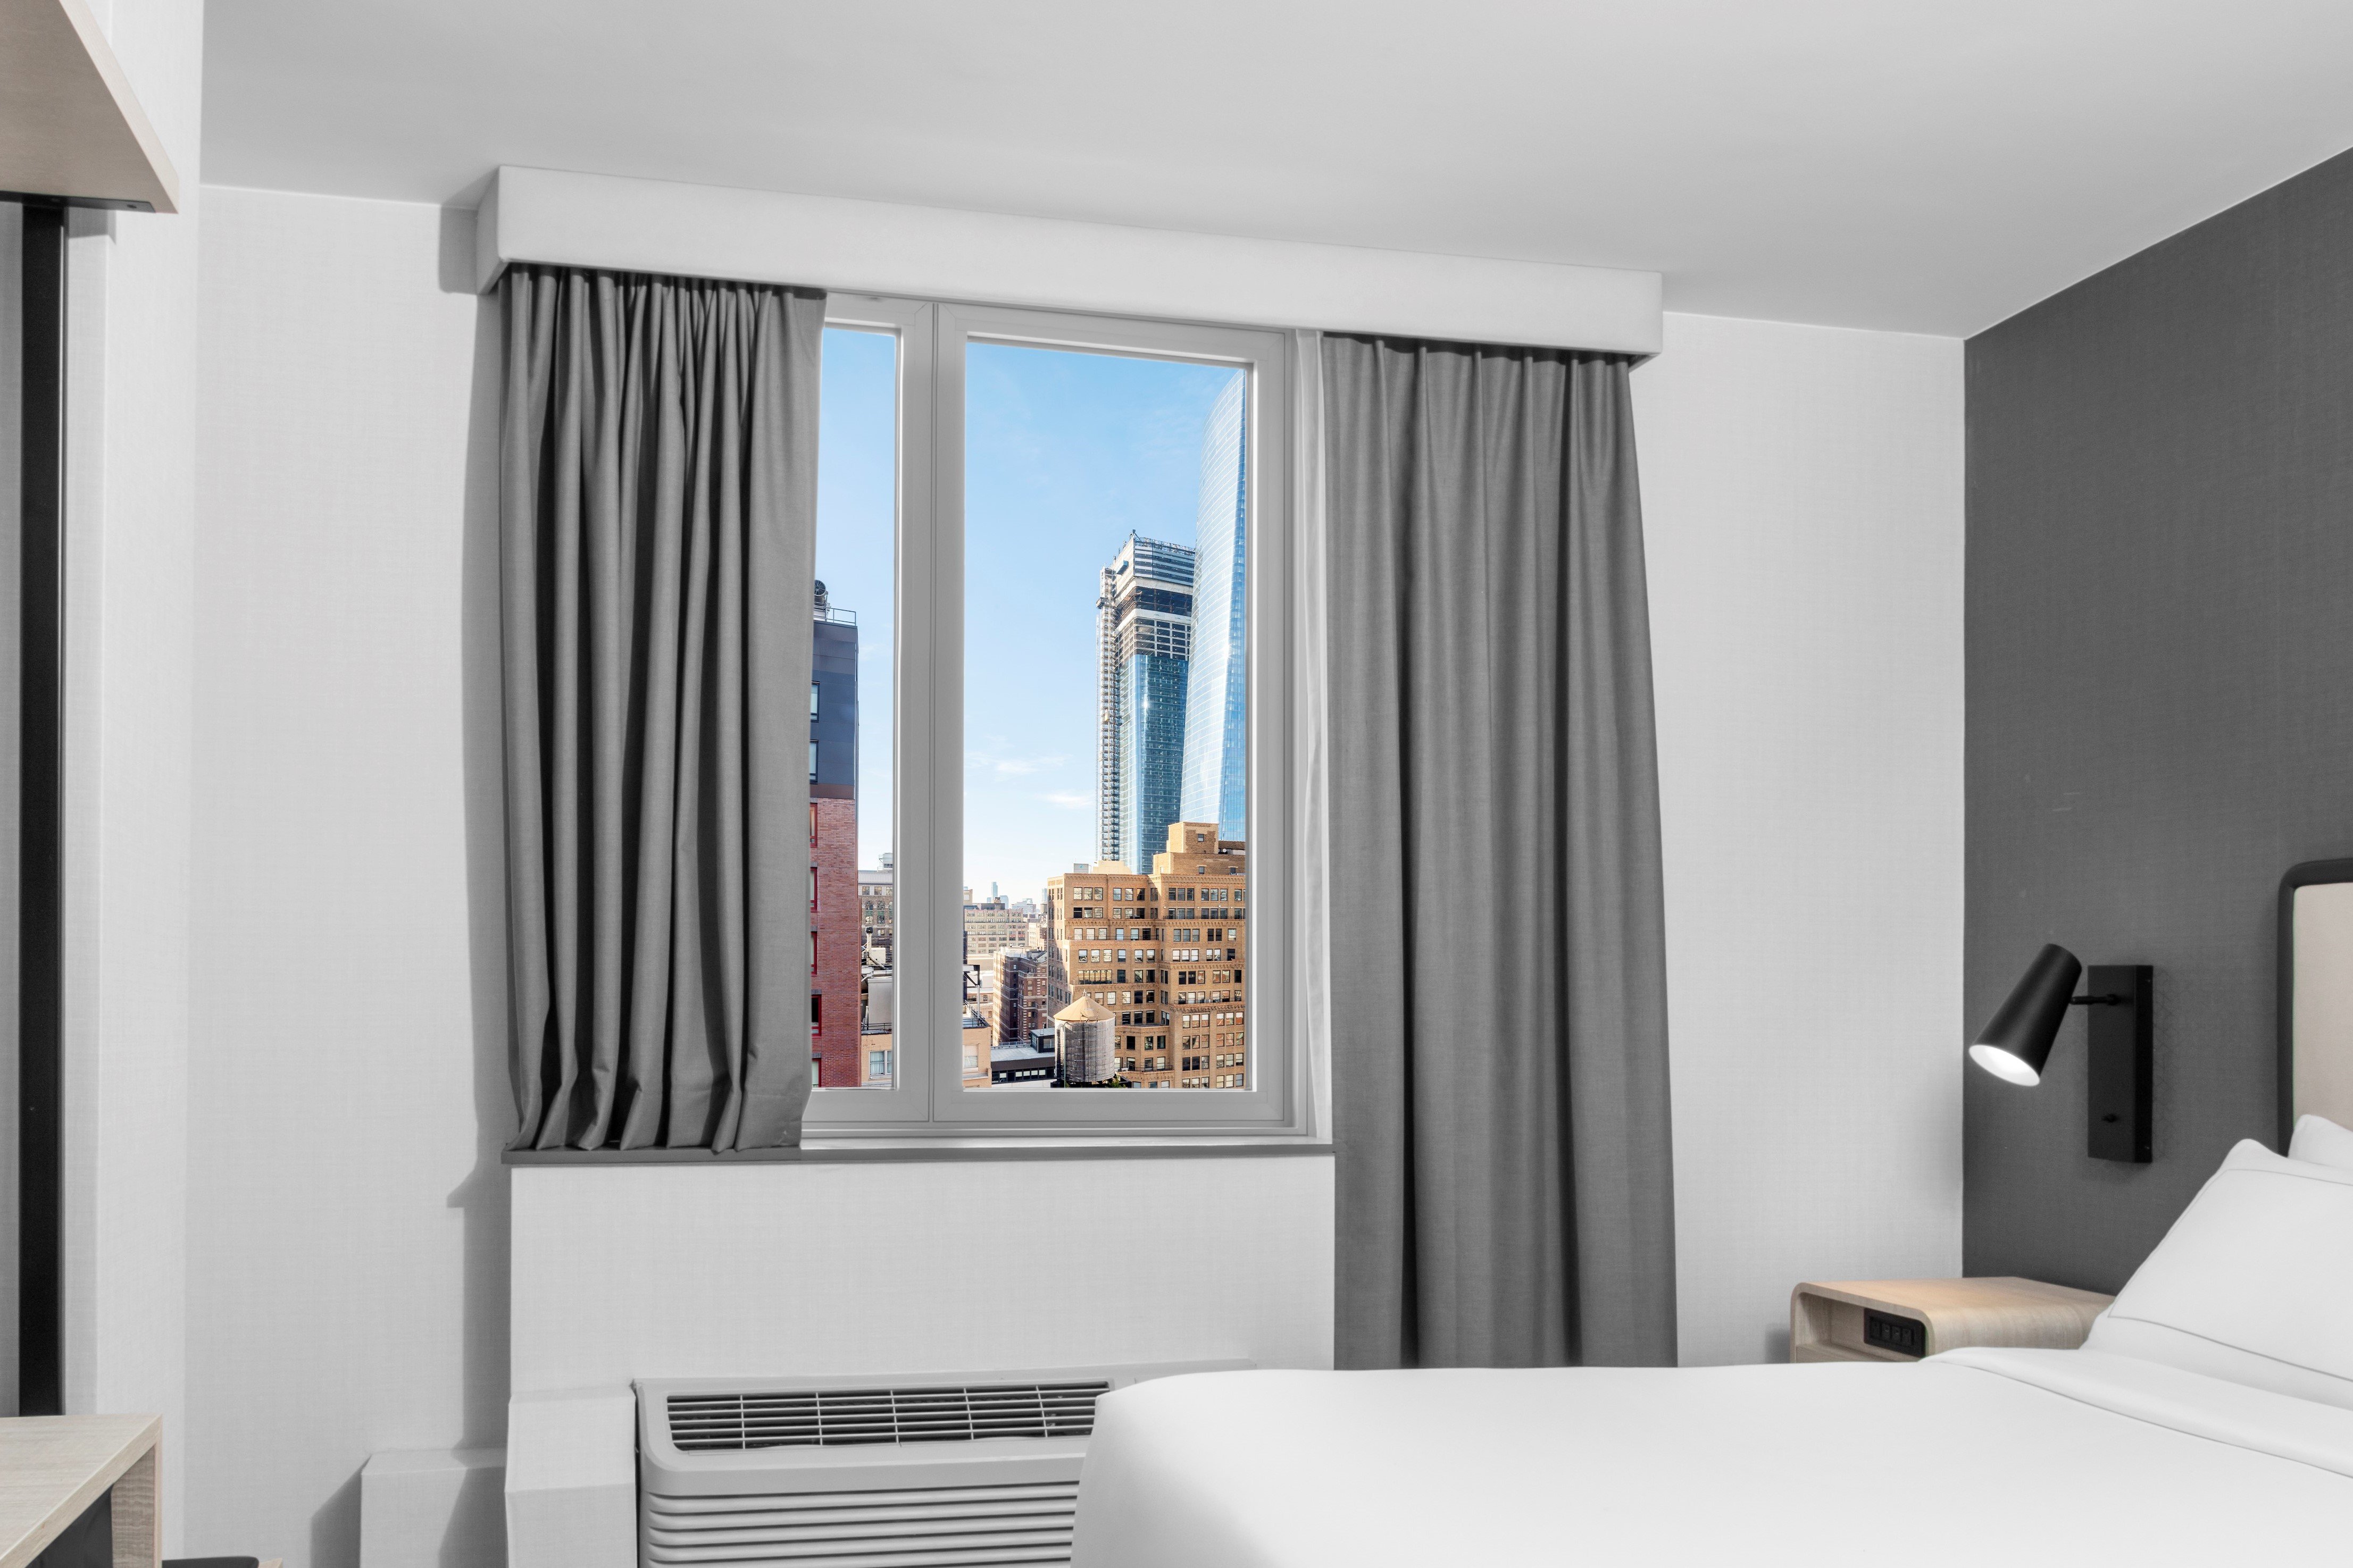 Premium guest rooms offer views of the Manhattan skyline.